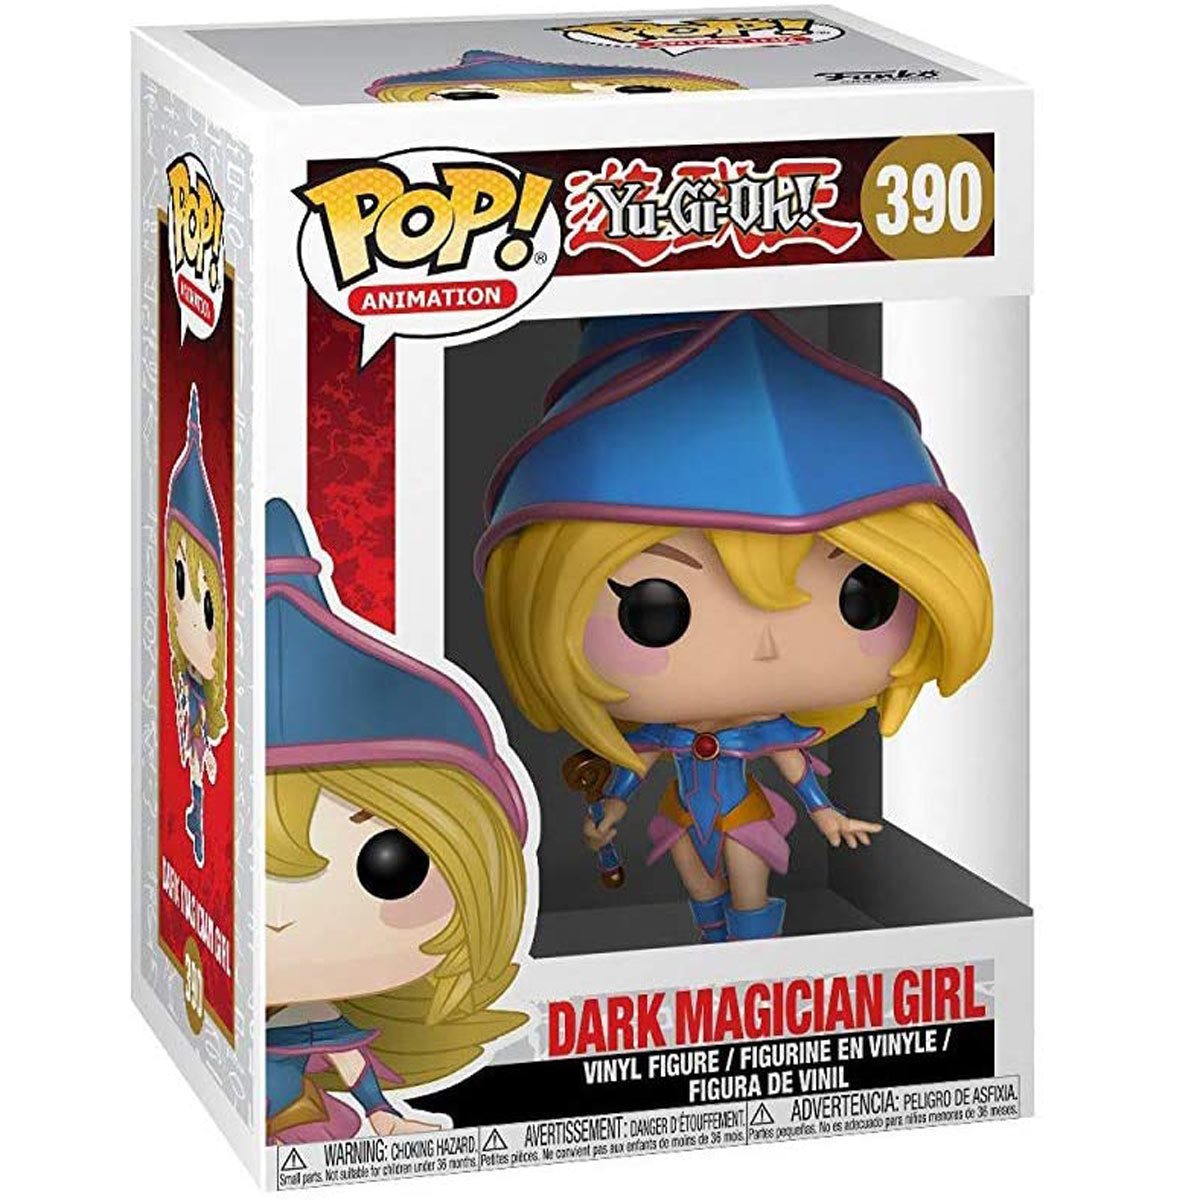 Yu-Gi-Oh! Dark Magician Girl Pop! Vinyl Figure #390